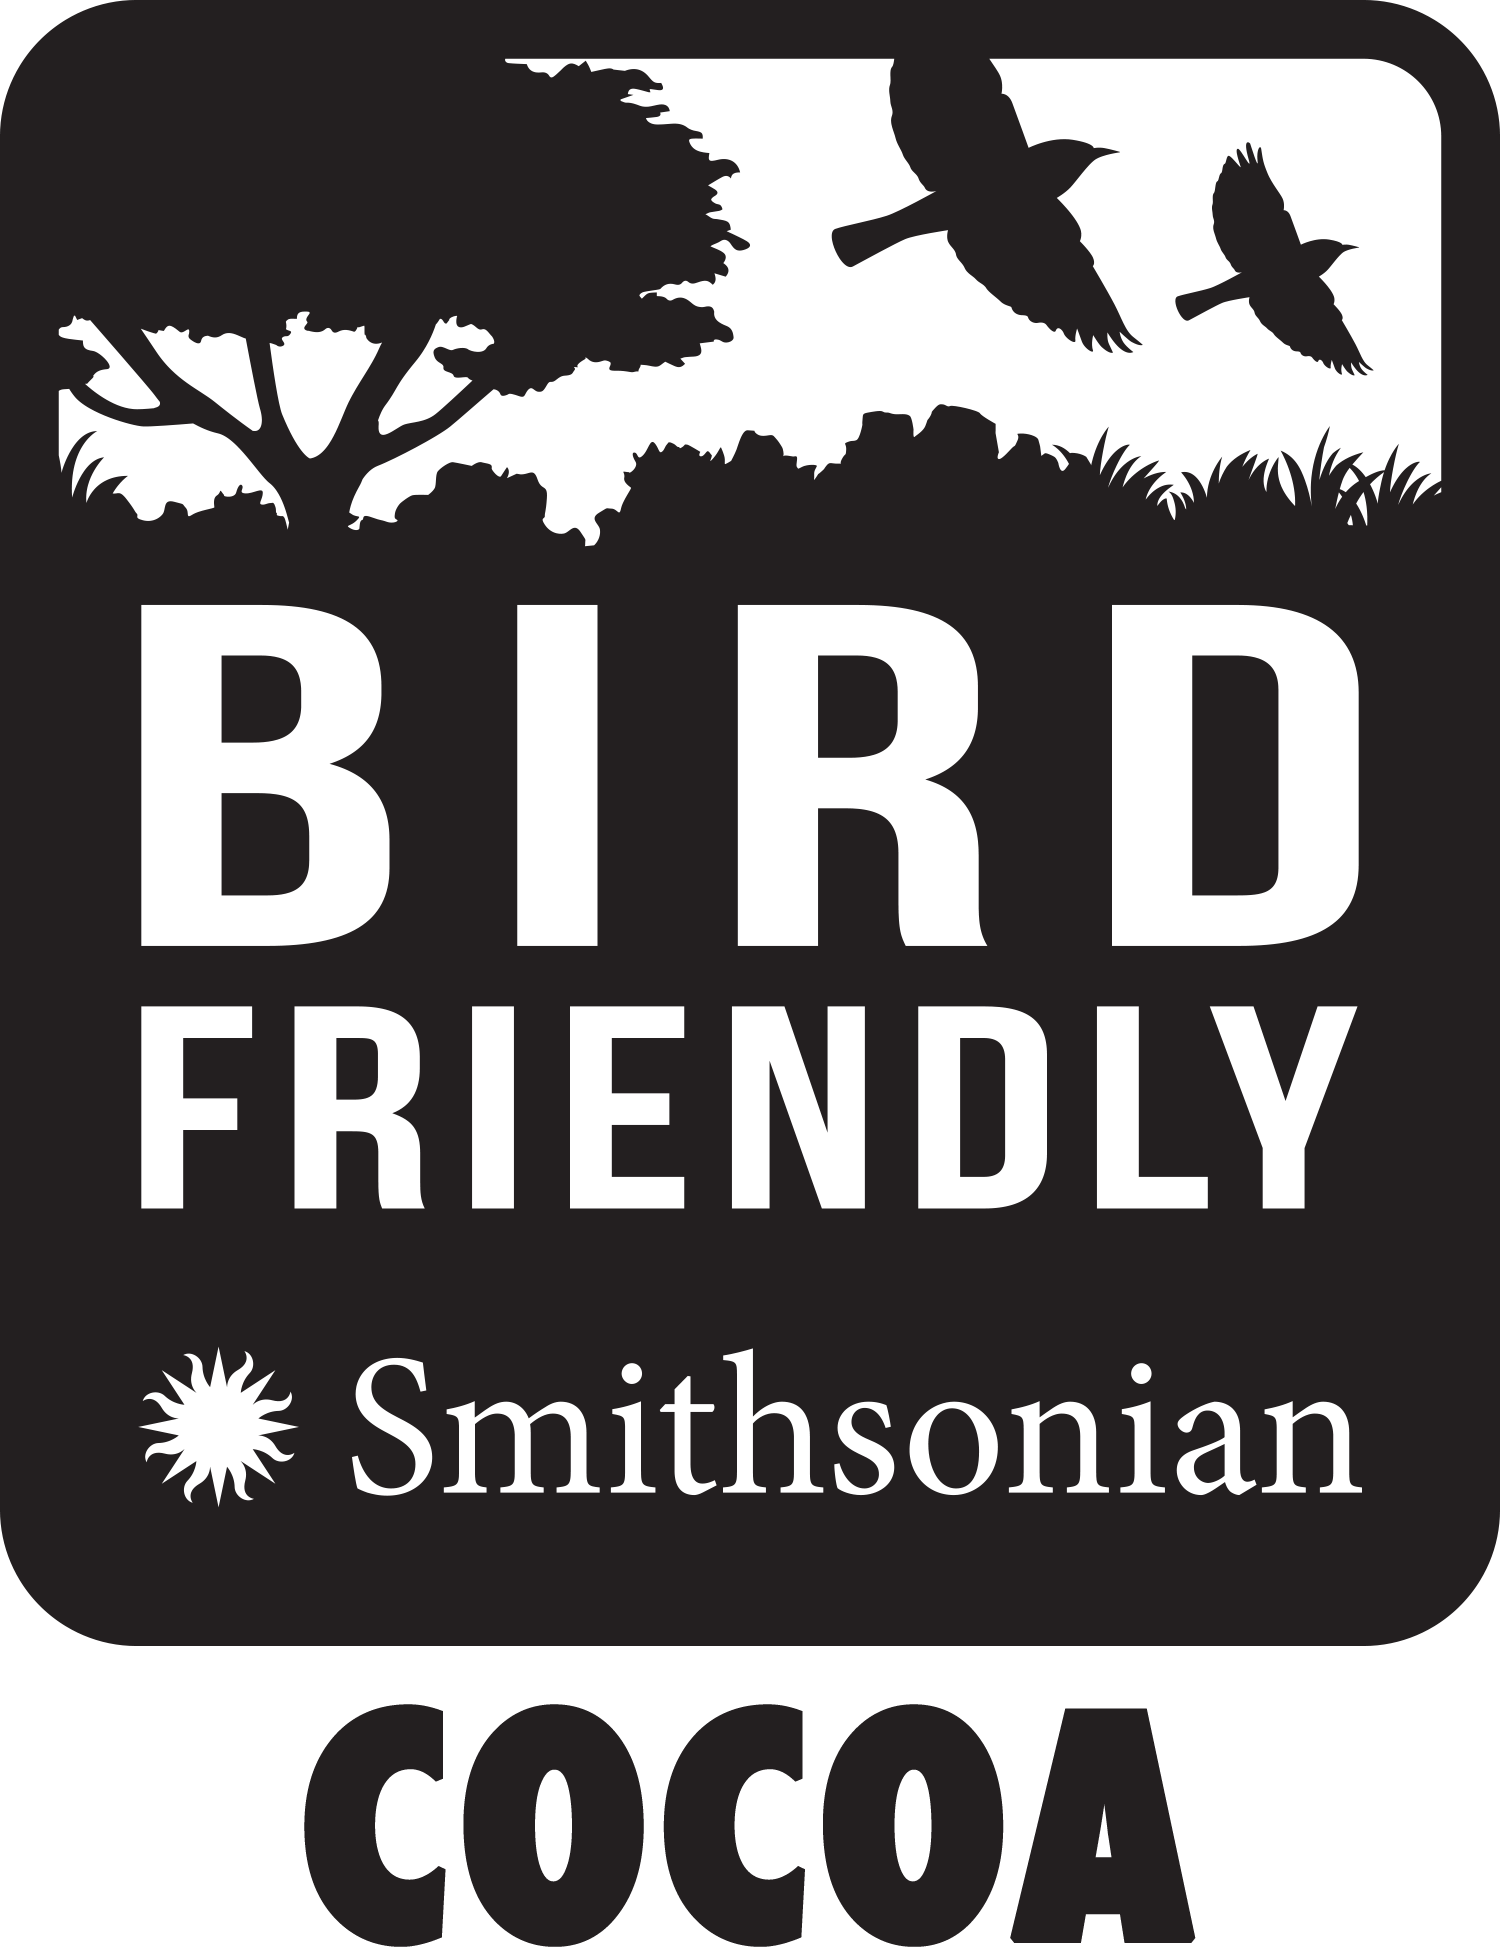 The Smithsonian Bird Friendly Cocoa Seal